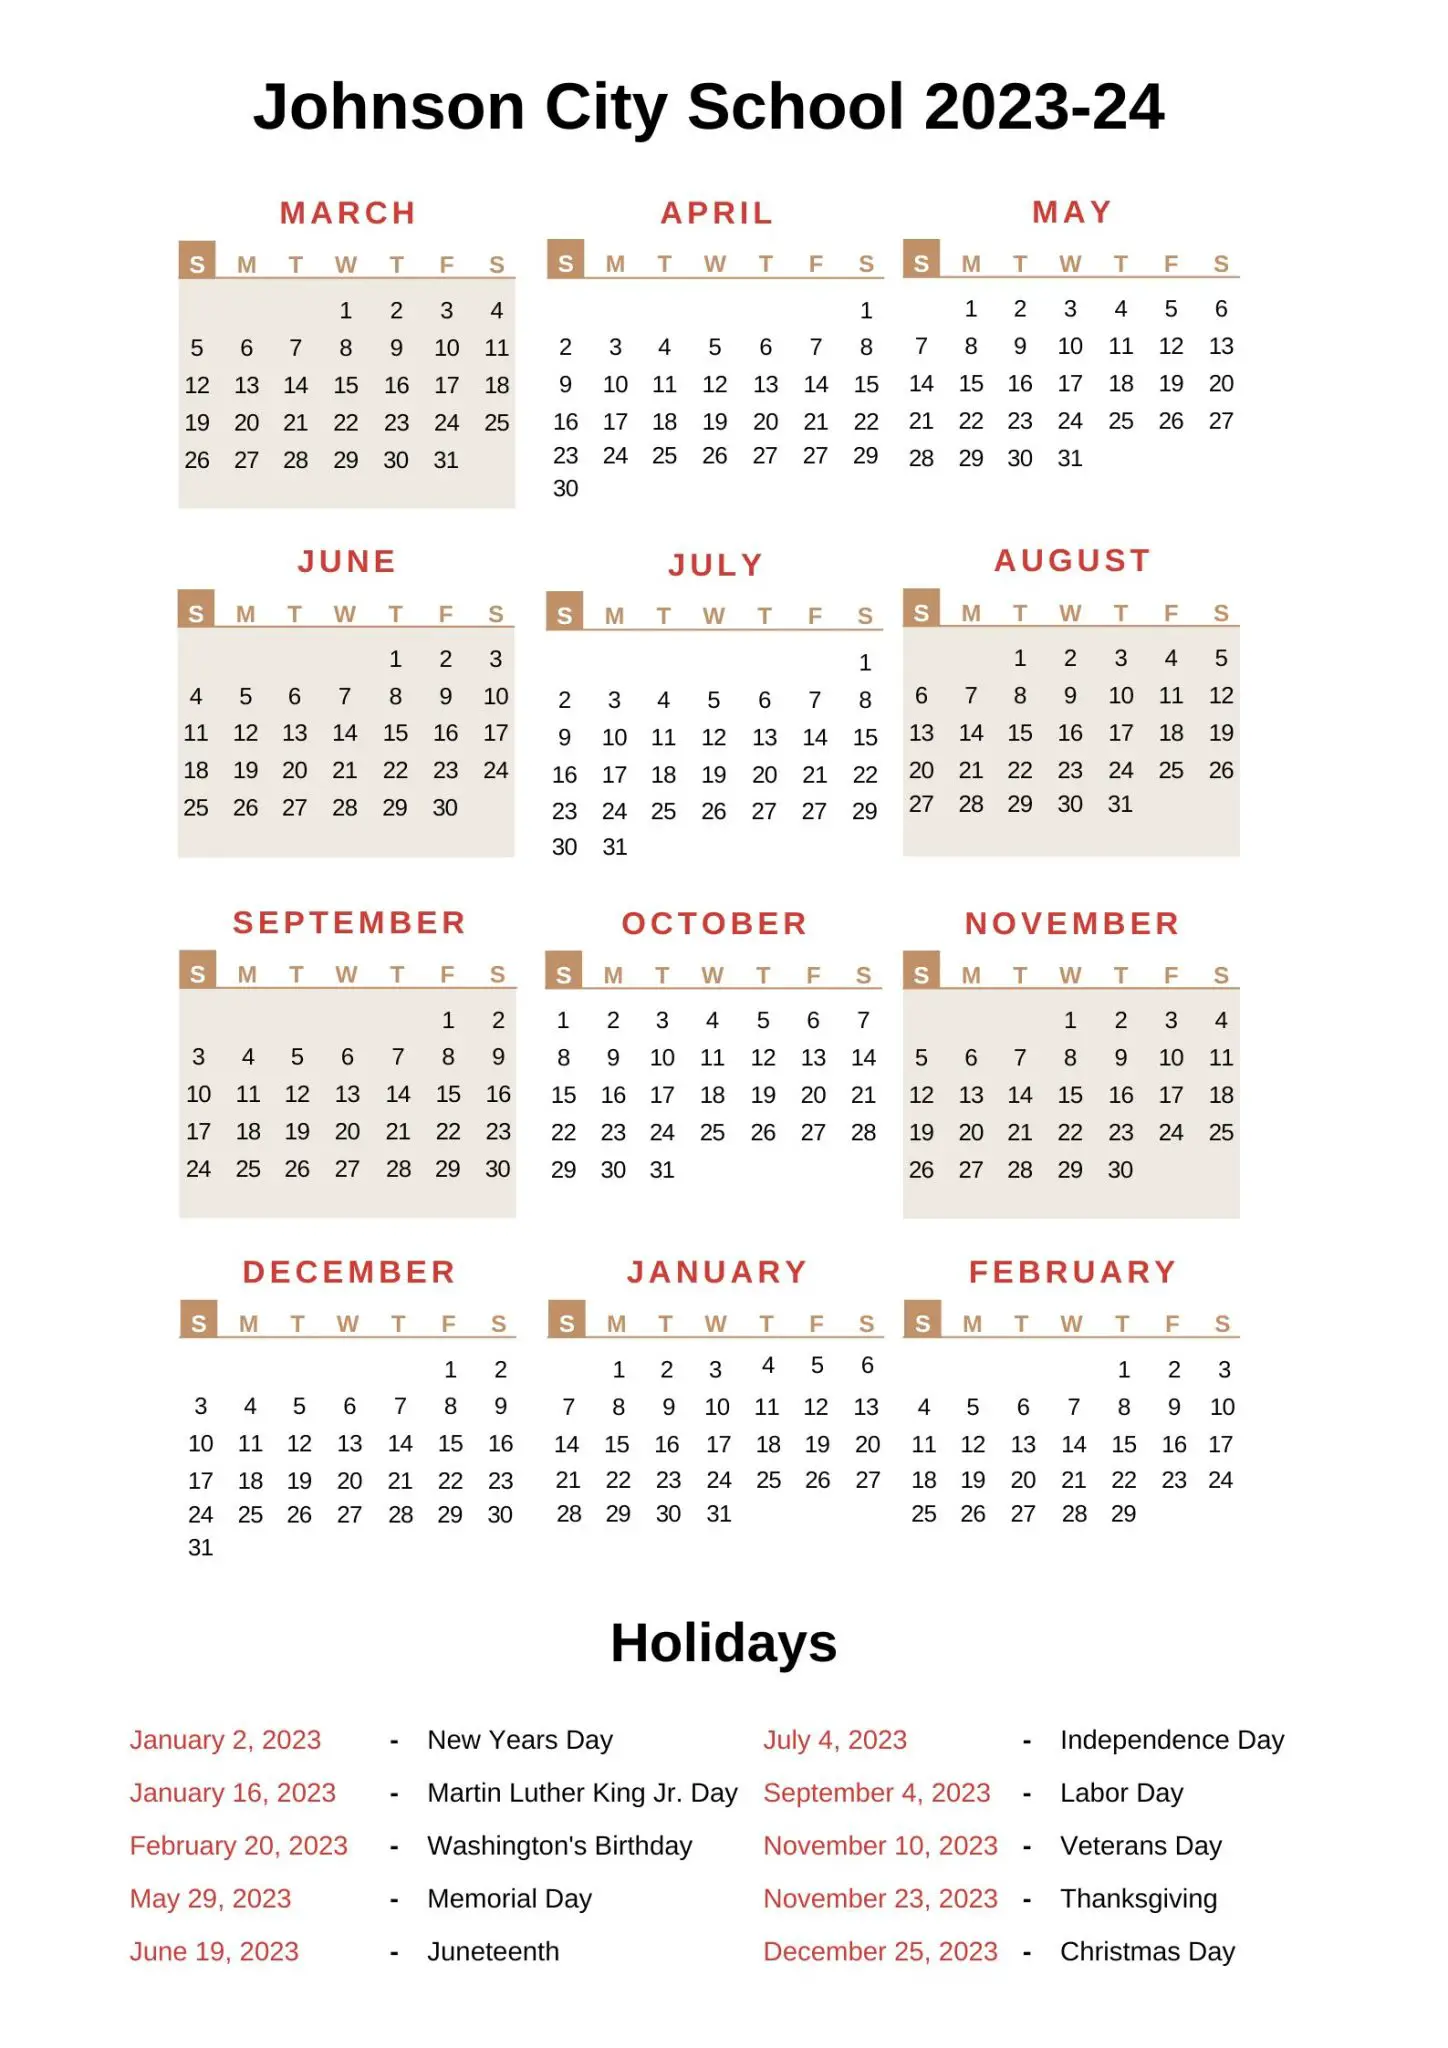 Johnson City Schools Calendar [JCS] 202324 with Holidays